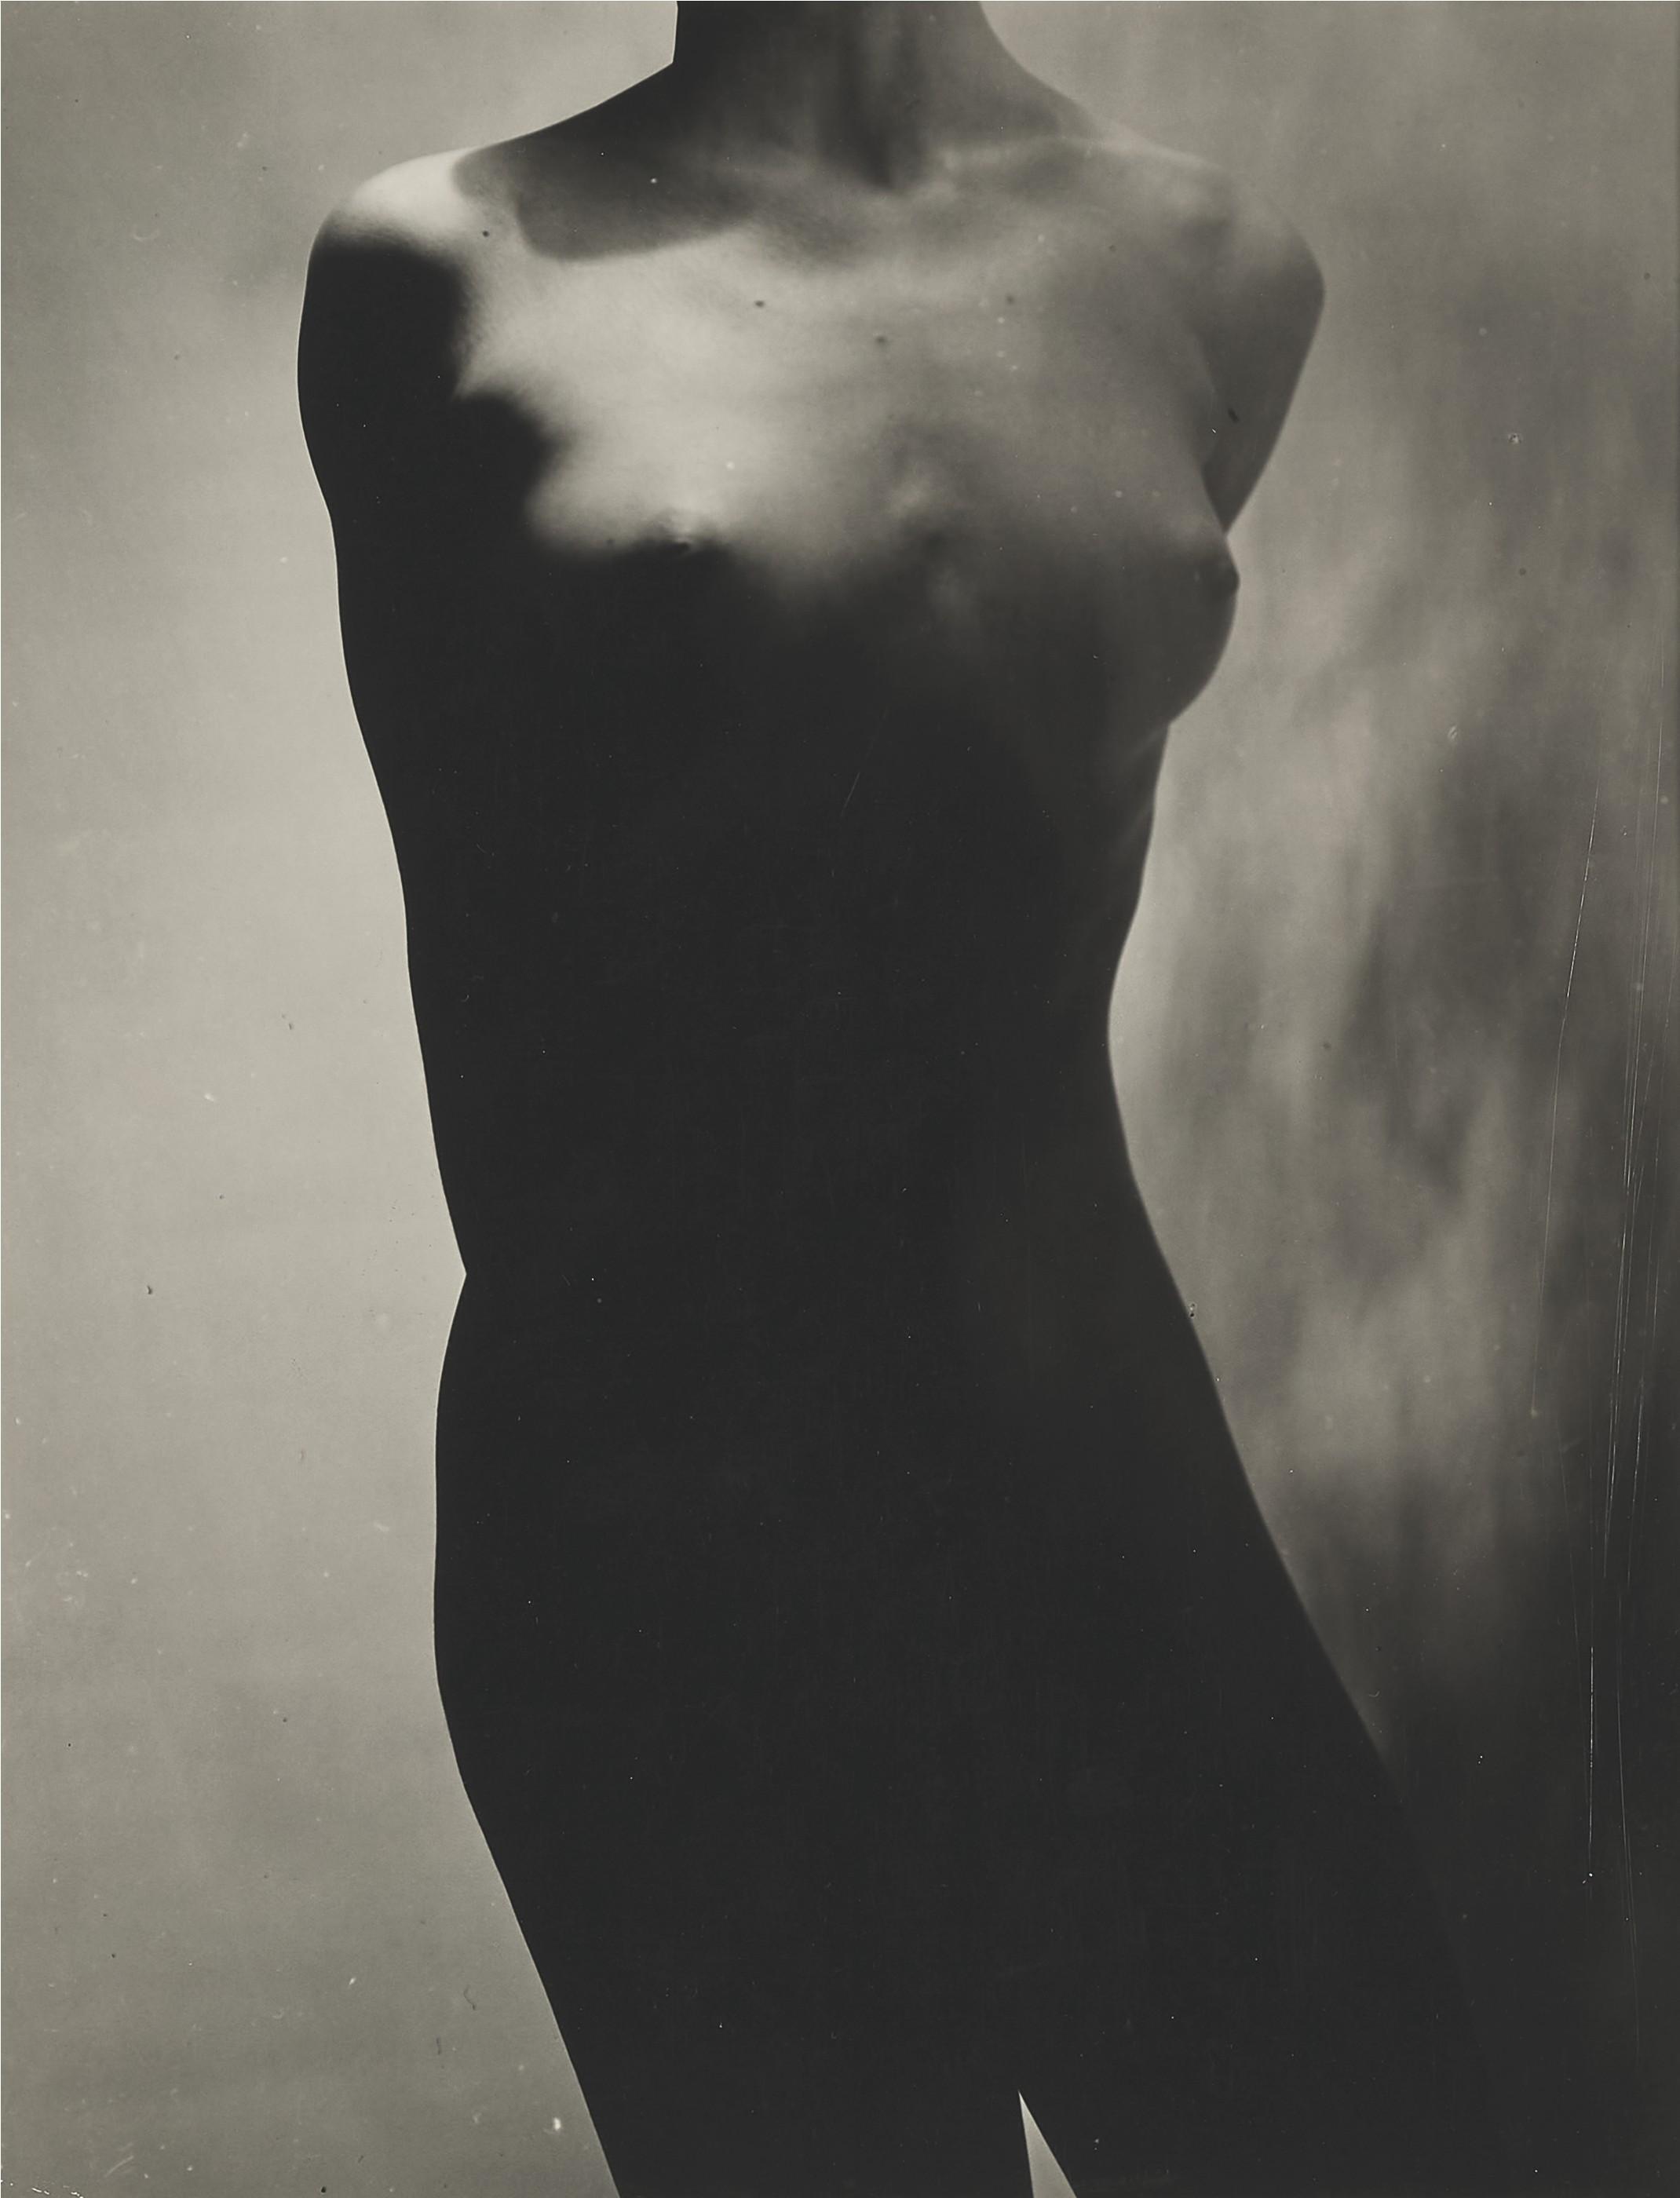 Nude Study, 1948 by Erwin Blumenfeld Art.Salon